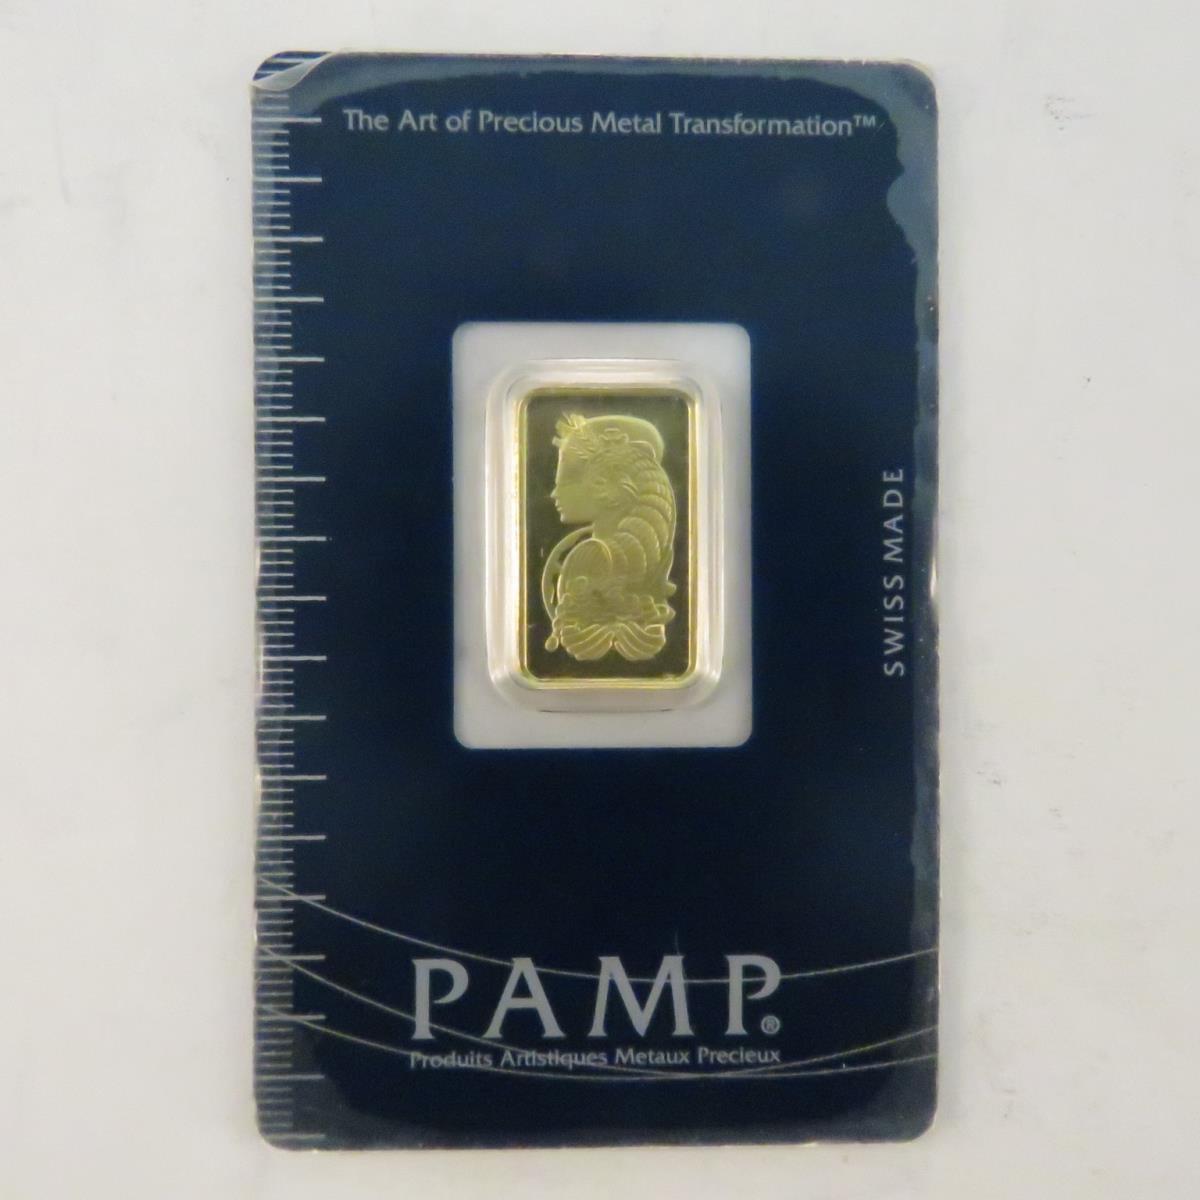 5g Gold Suisse Pamp bar